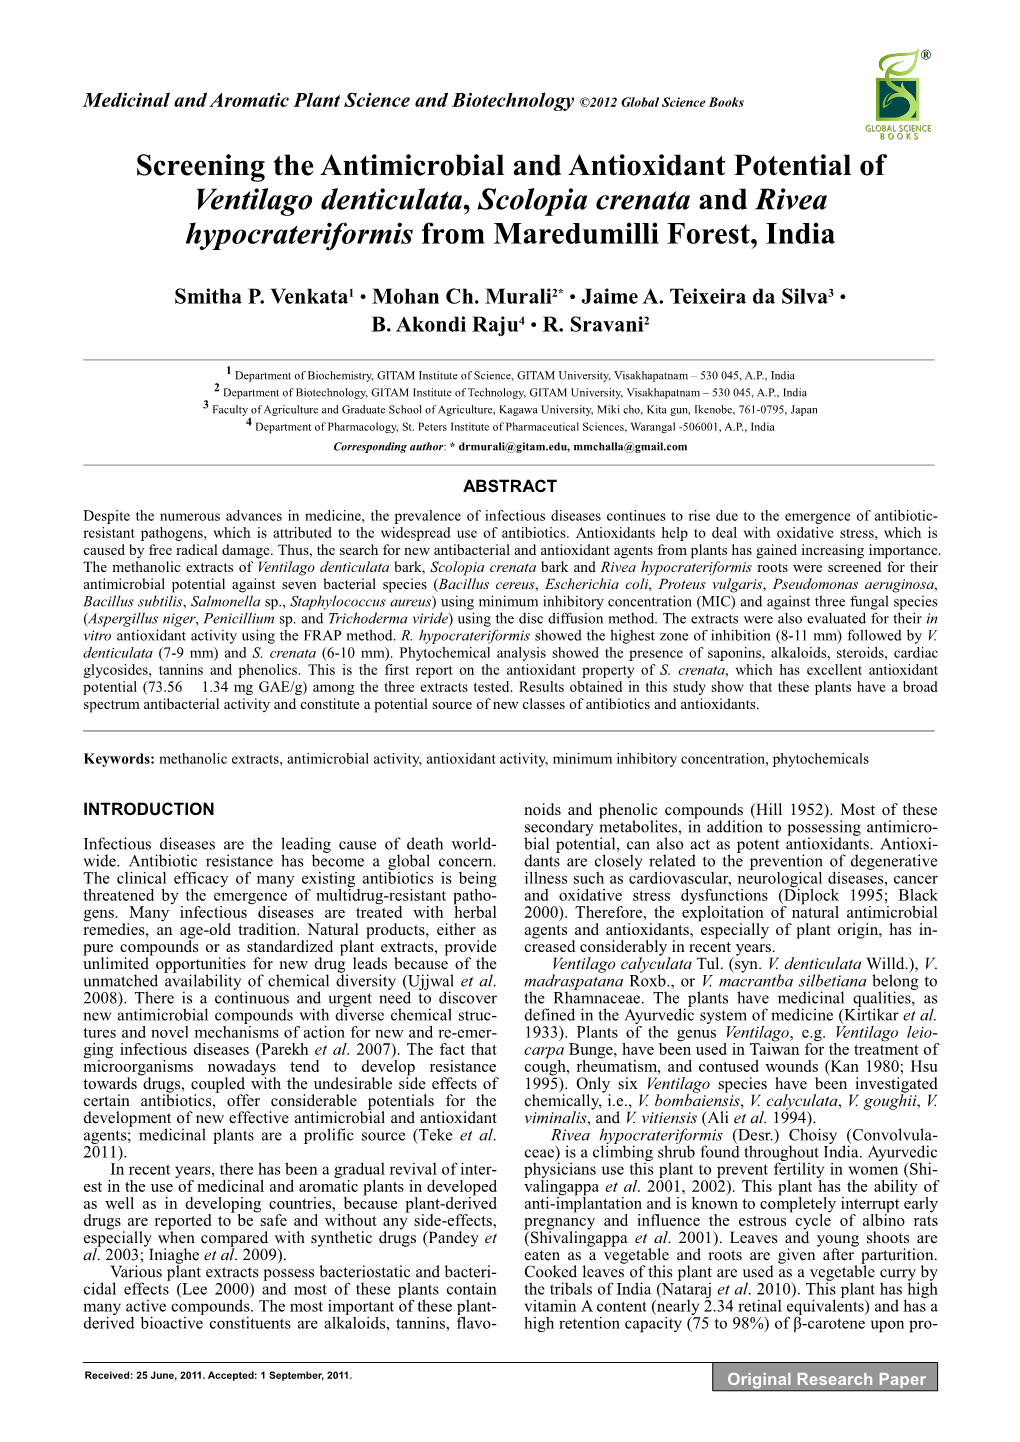 Screening the Antimicrobial and Antioxidant Potential of Ventilago Denticulata, Scolopia Crenata and Rivea Hypocrateriformis from Maredumilli Forest, India